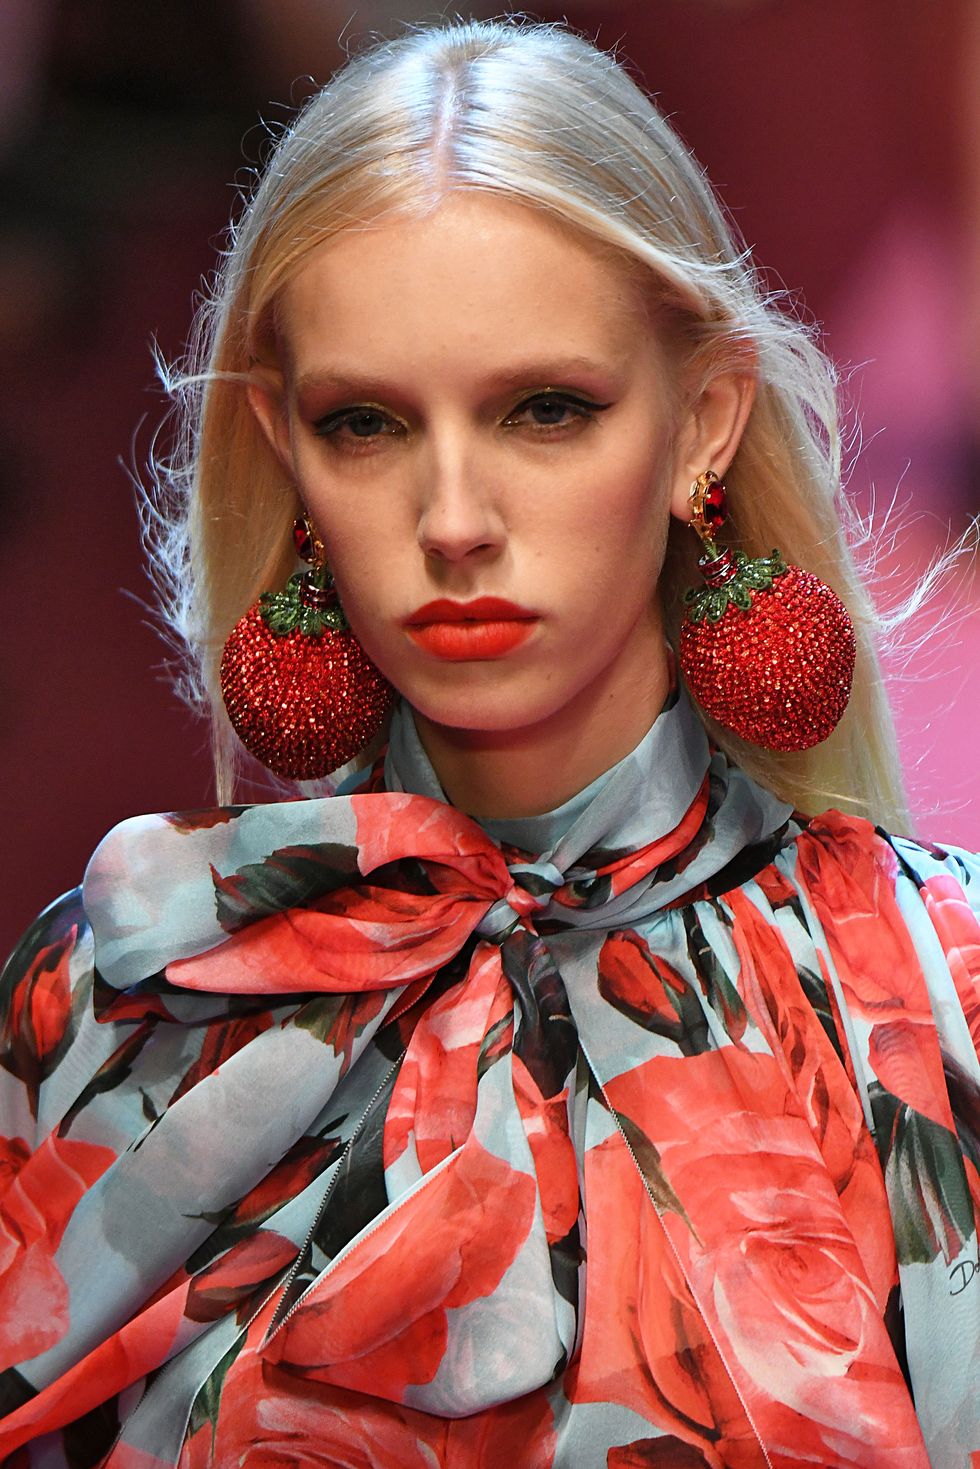 Dolce & Gabbana Satin bra, Women's Clothing